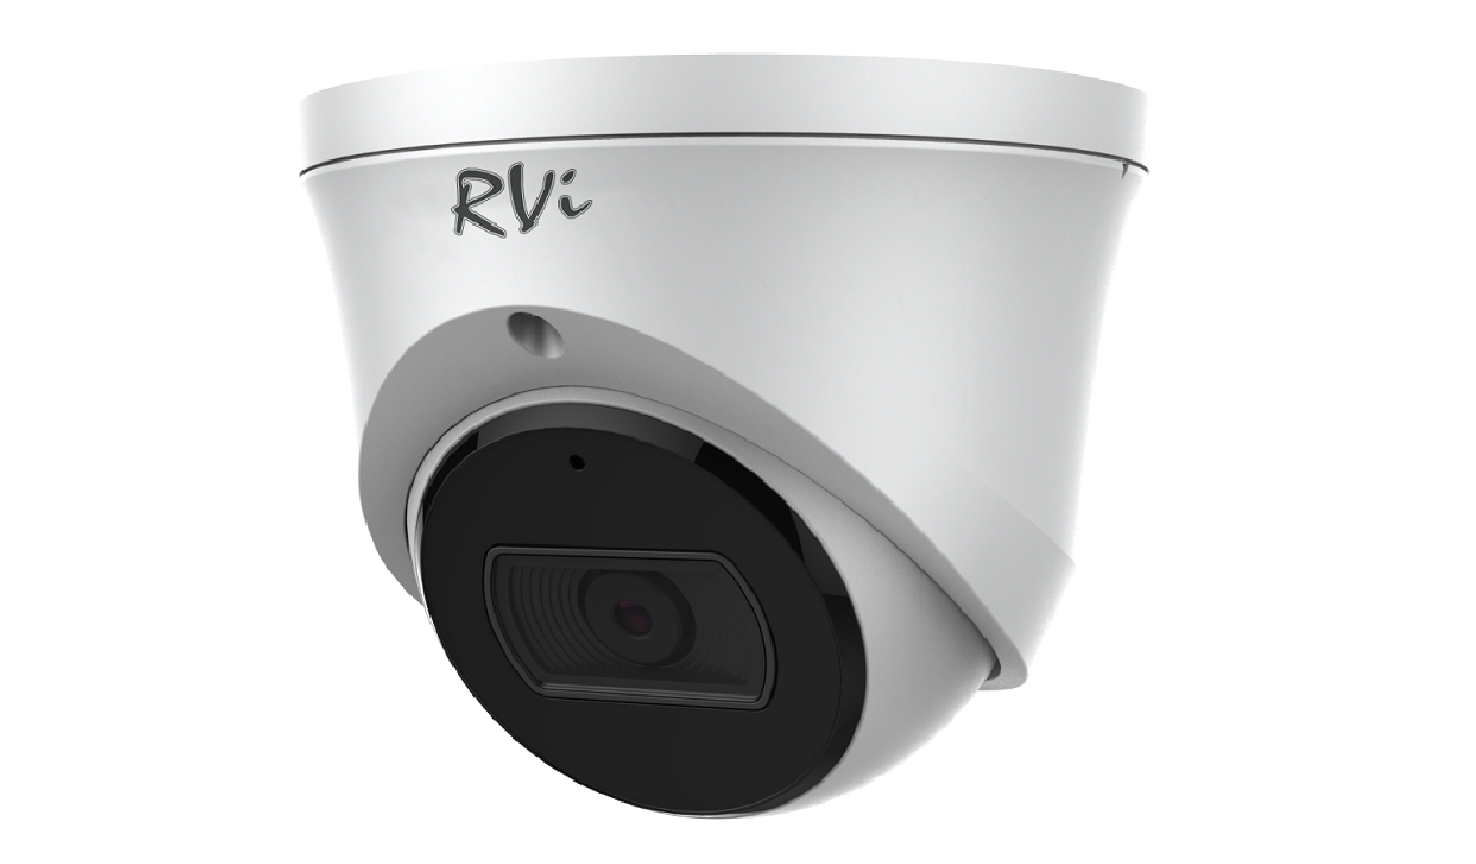 IP-камера RVi RVi-1NCE4052 2.8 мм, уличная, купольная, 4Мпикс, CMOS, до 2560x1440, до 25 кадров/с, ИК подсветка 30м, POE, -40 °C/+60 °C, белый (RVi-1NCE4052)